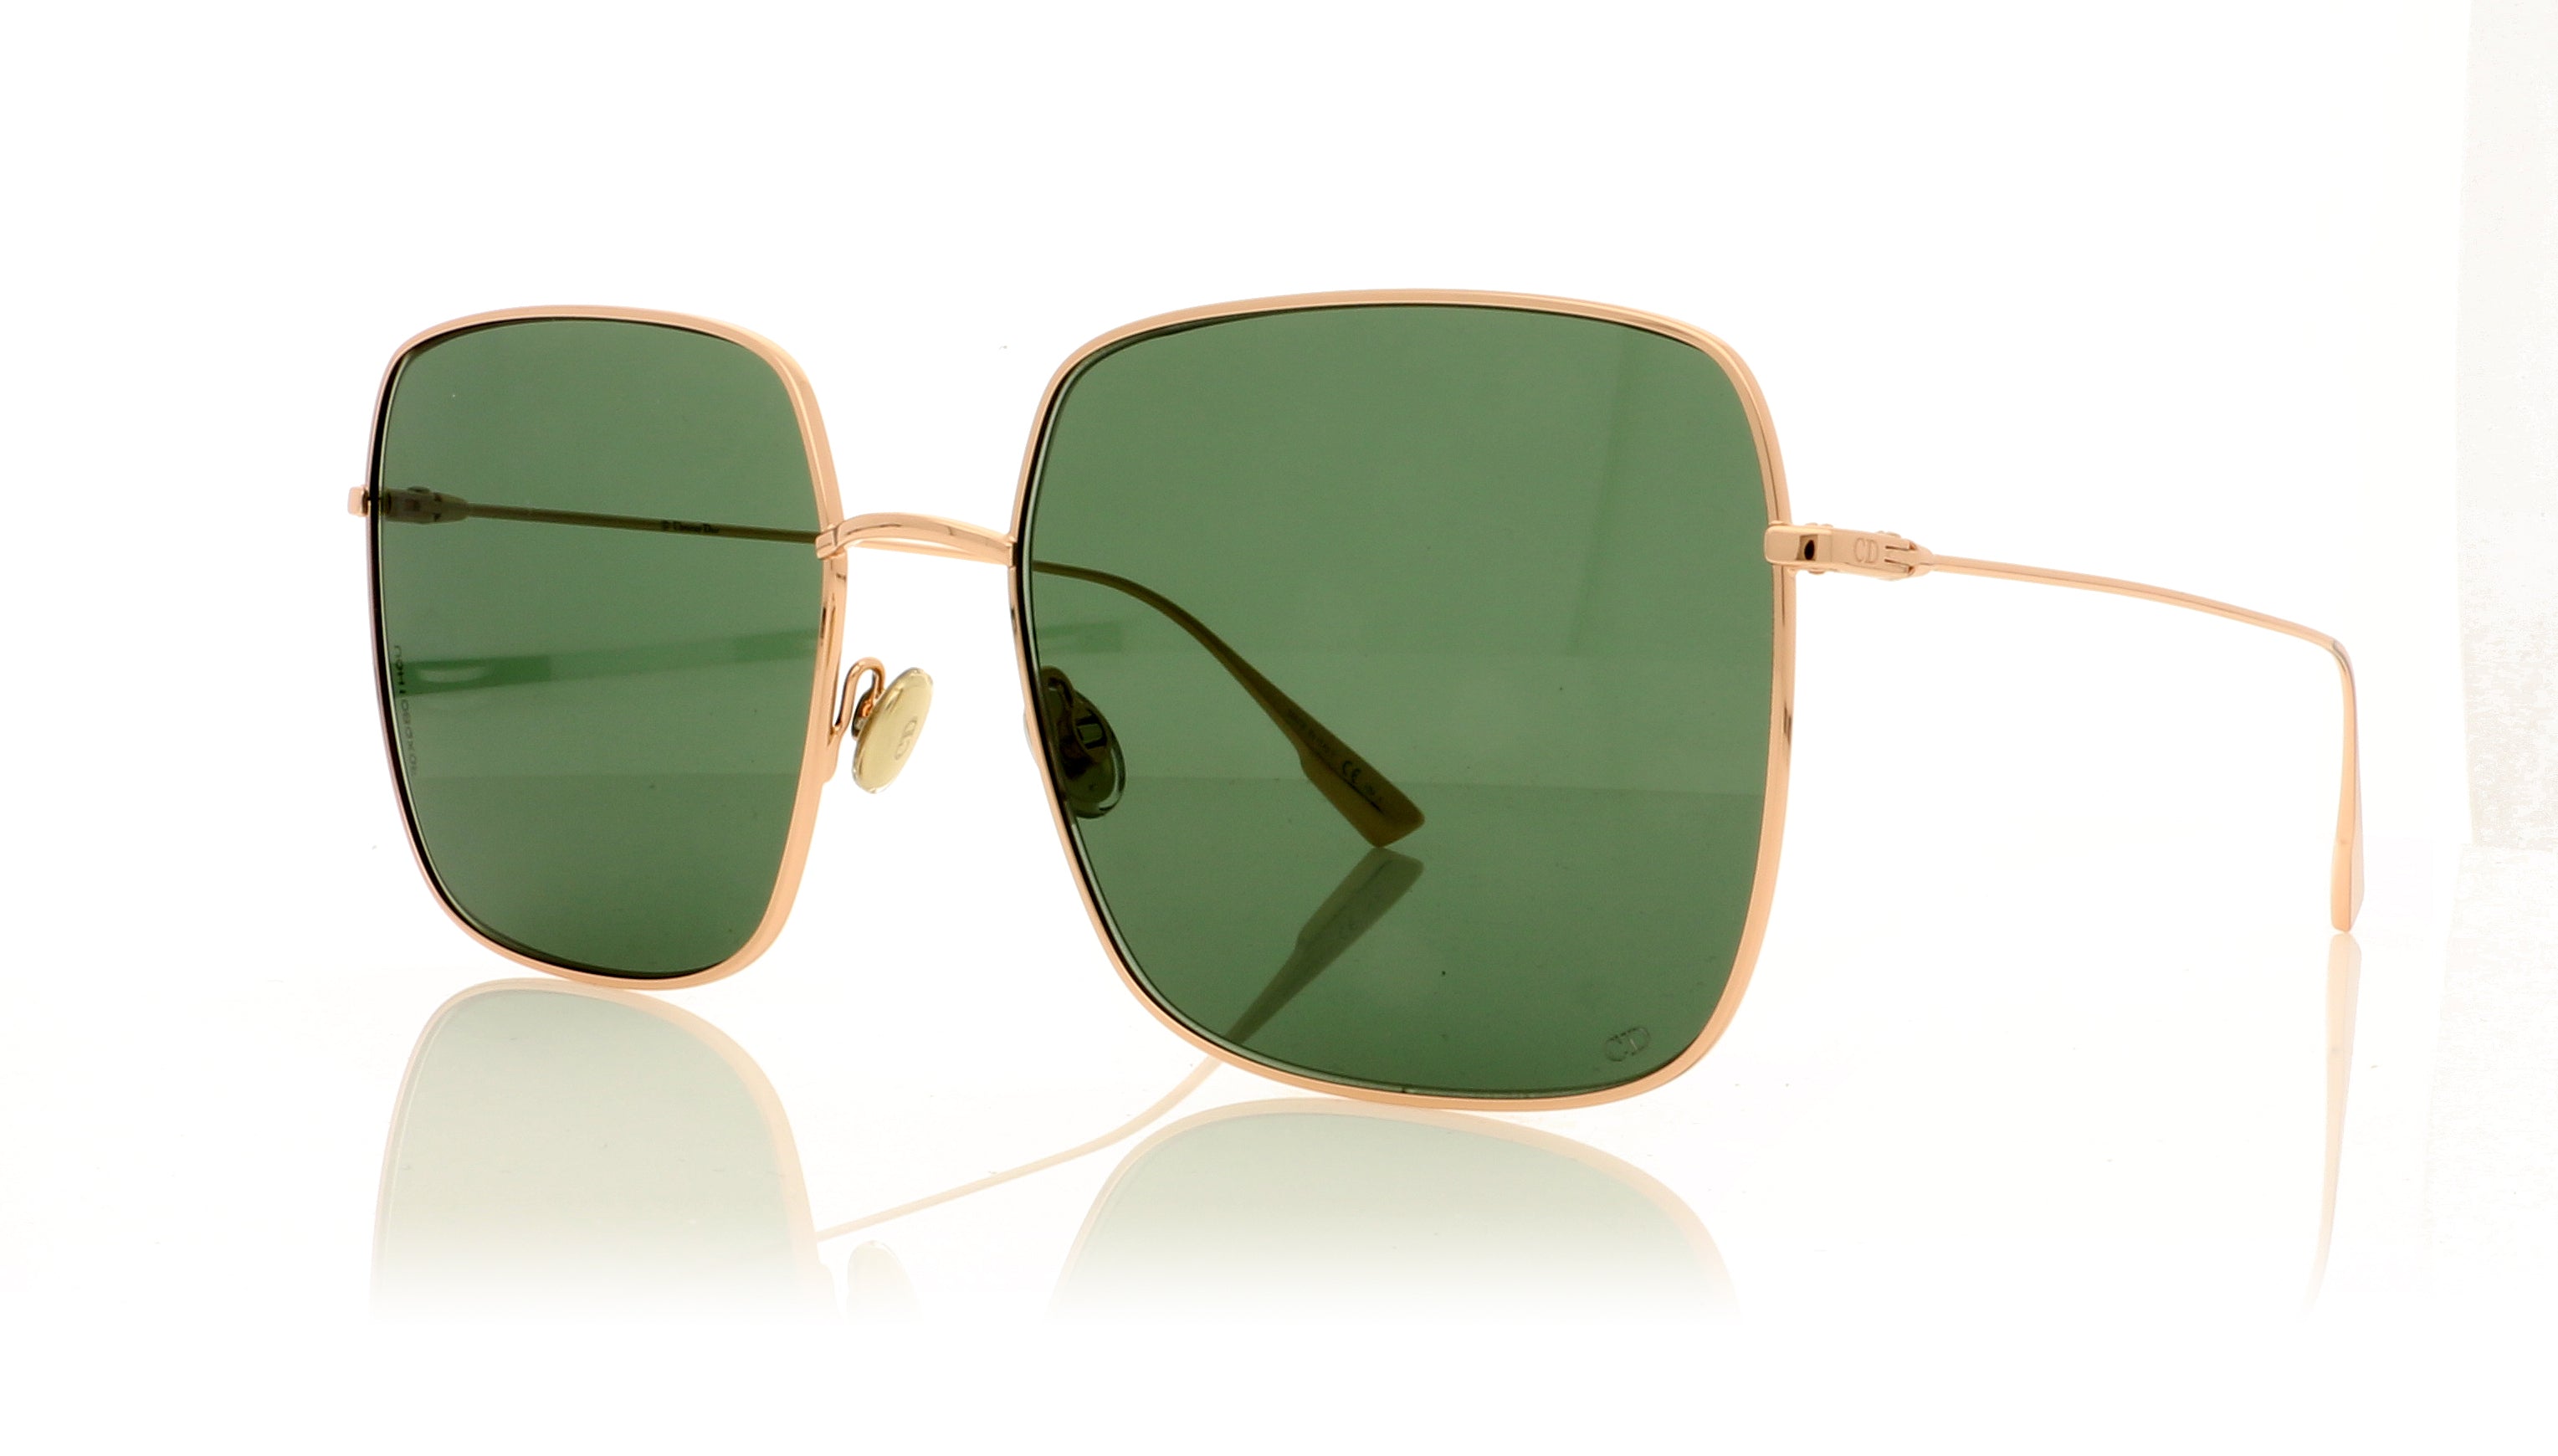 Dior Stellaire 1 sunglasses feature a squared flat  Depop